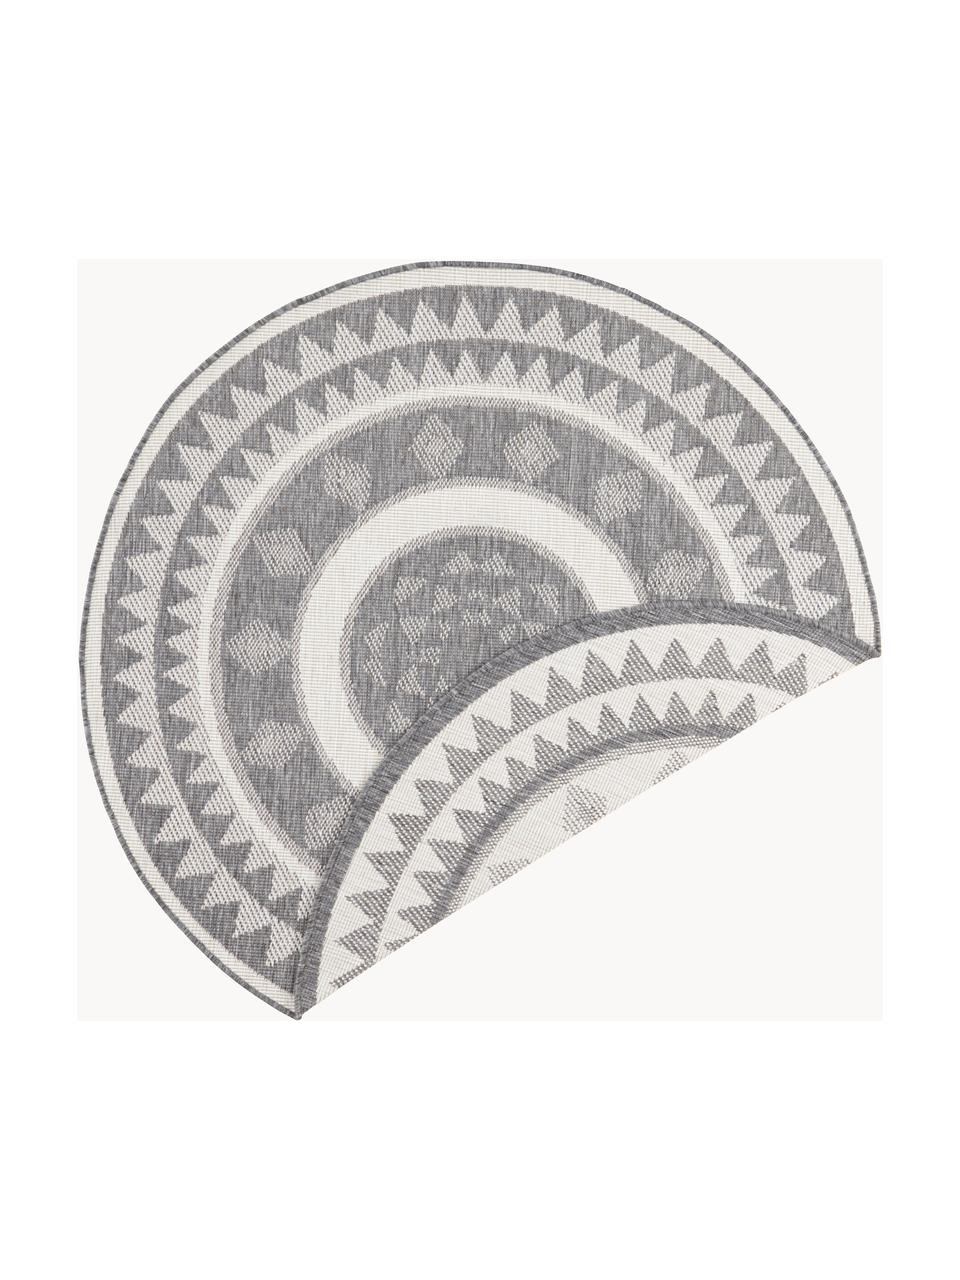 Alfombra redonda reversible de interior/exterior Jamaica, Gris, crema, Ø 140 cm (Tamaño M)